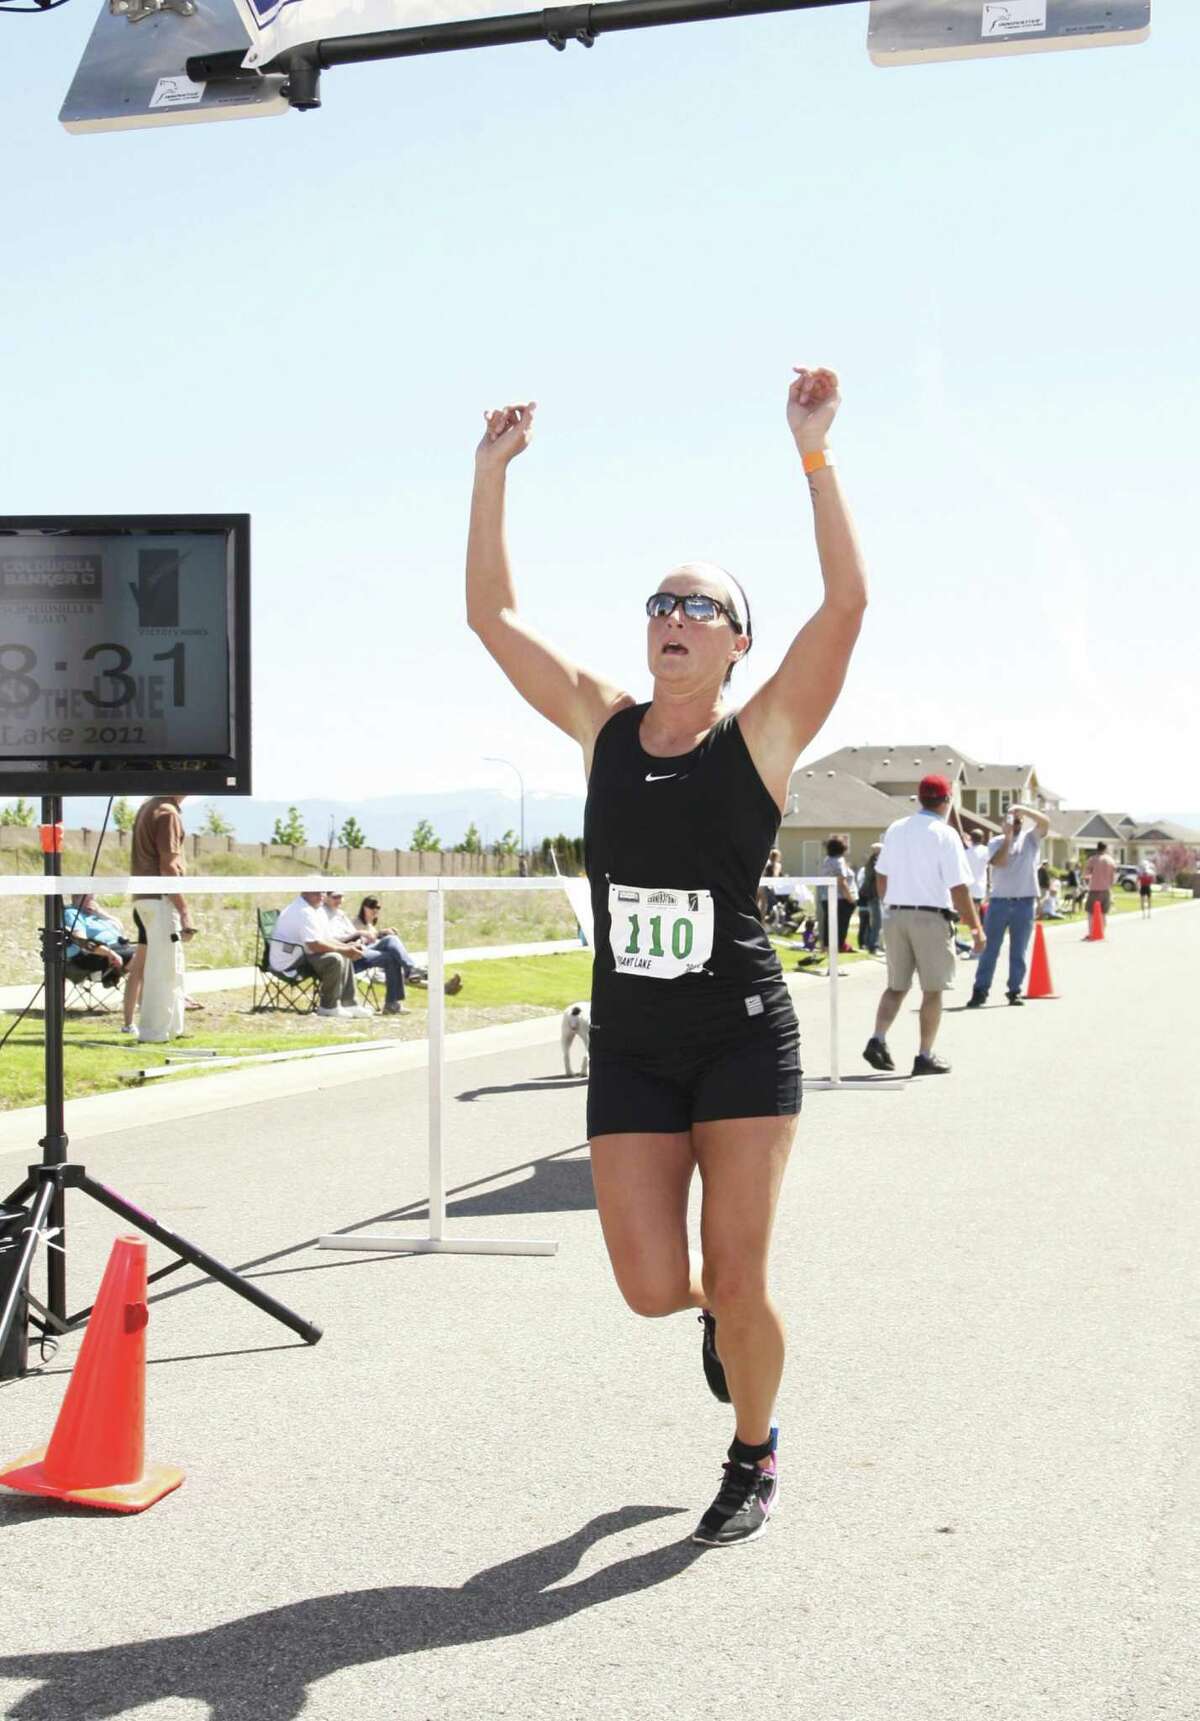 download marathon woman running the race to revolutionize women